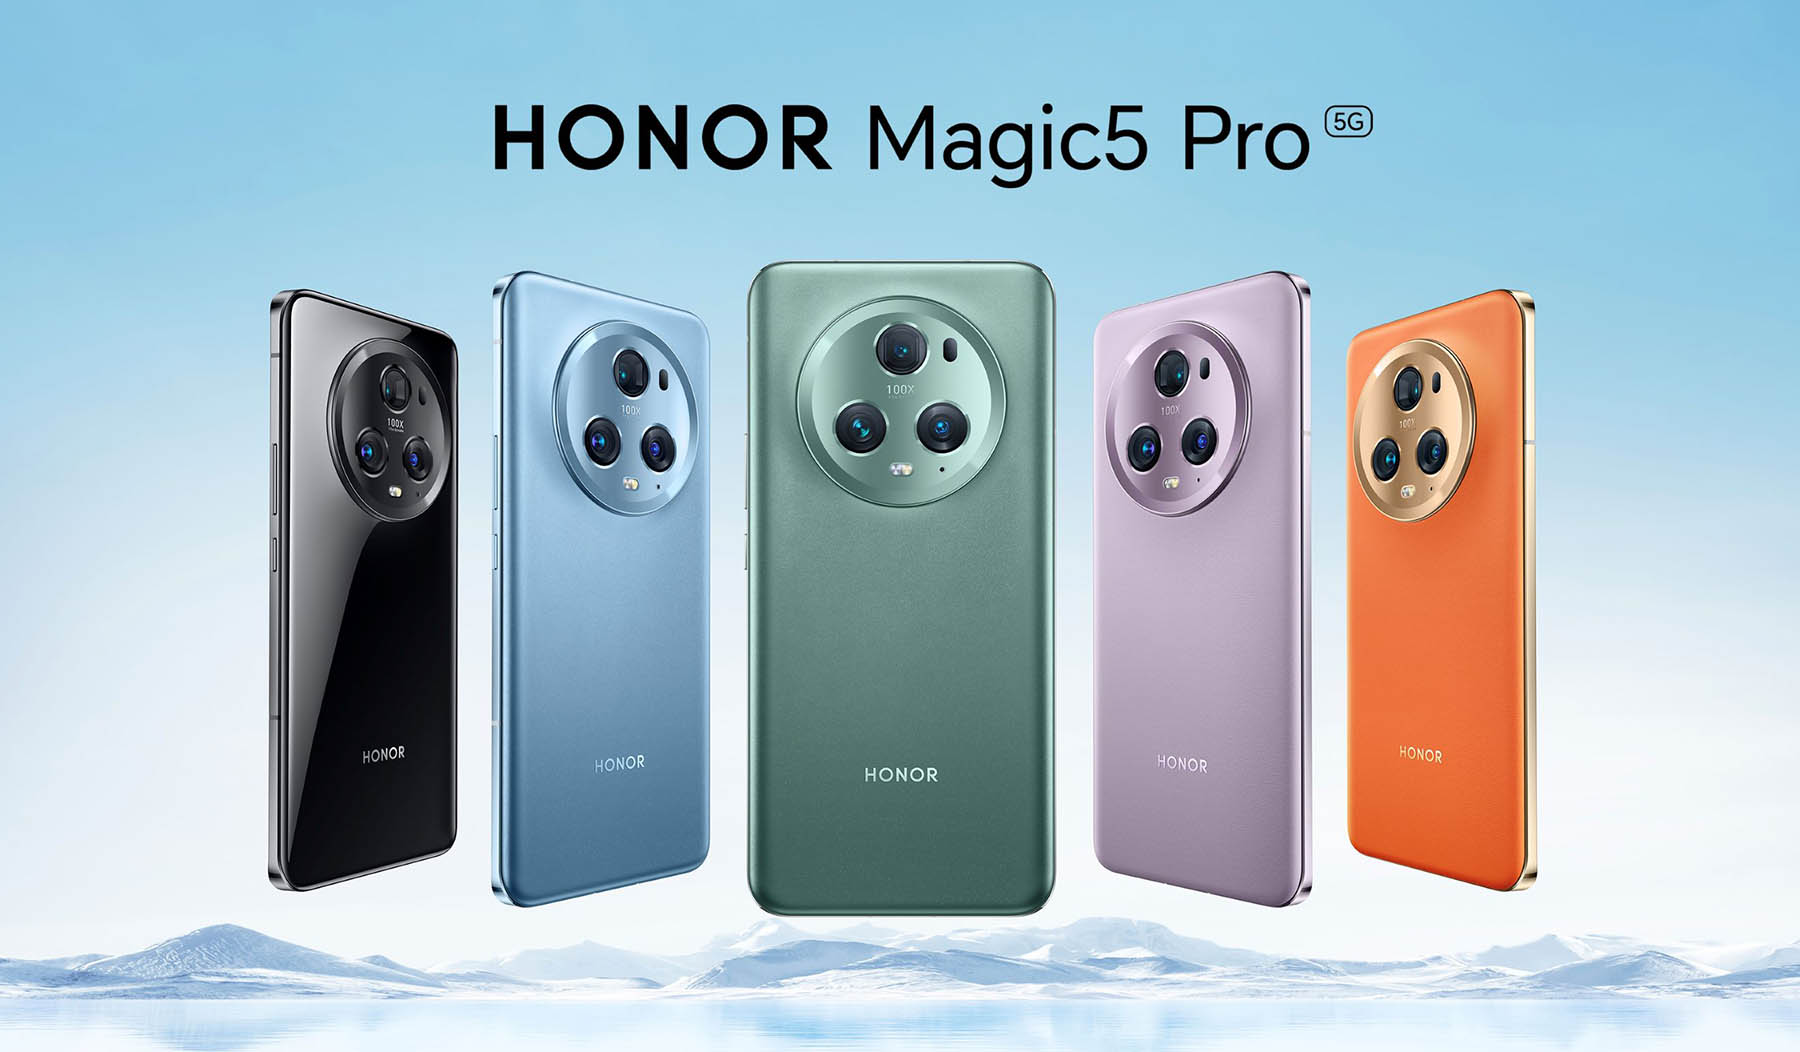 HONOR Magic5 Pro colors